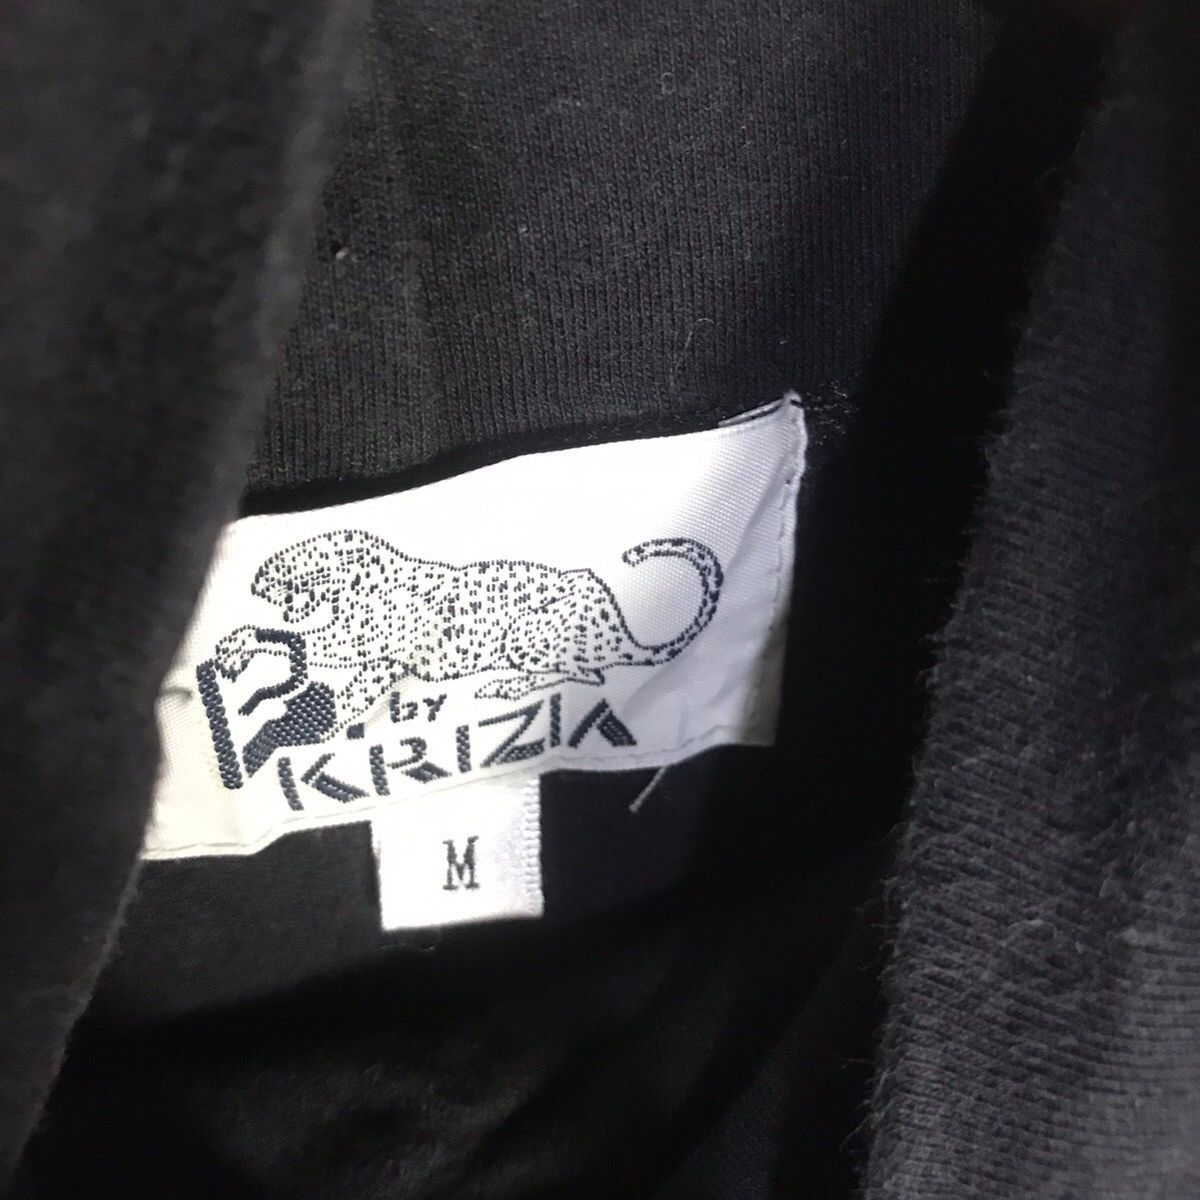 Krizia Uomo - B by krizia fullprinted long sleeve turtleneck tshirt - 6